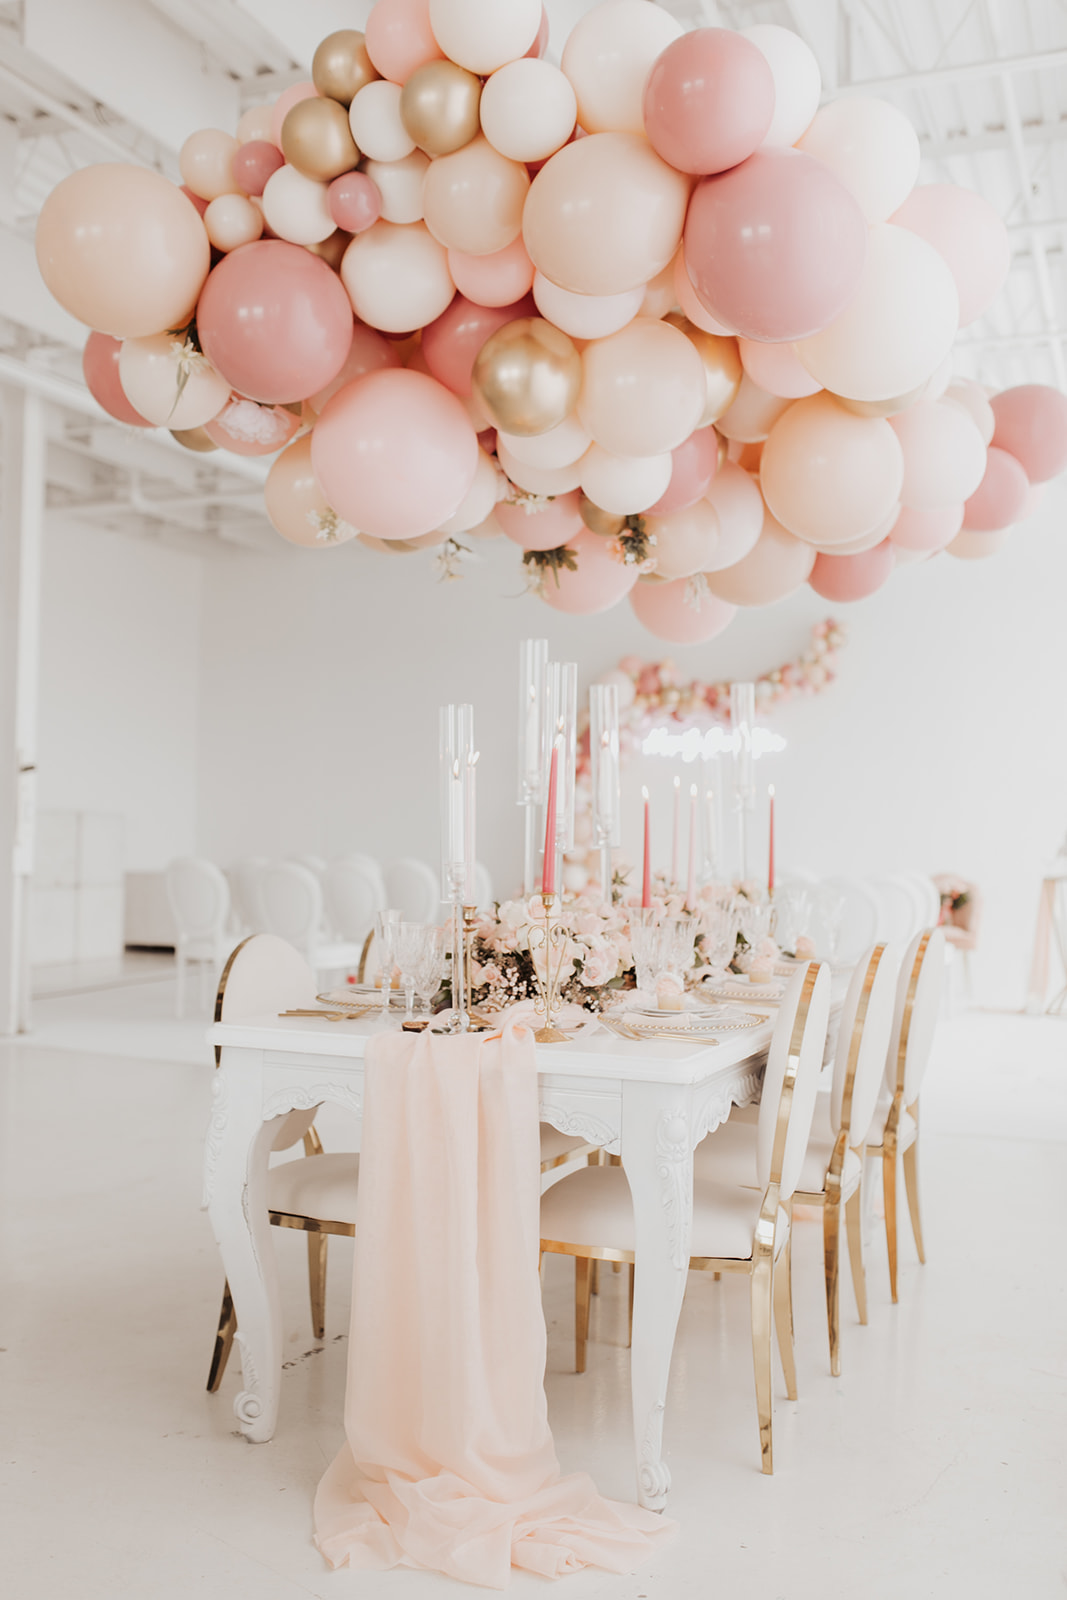 Spring wedding inspo with an adorable balloon chandelier